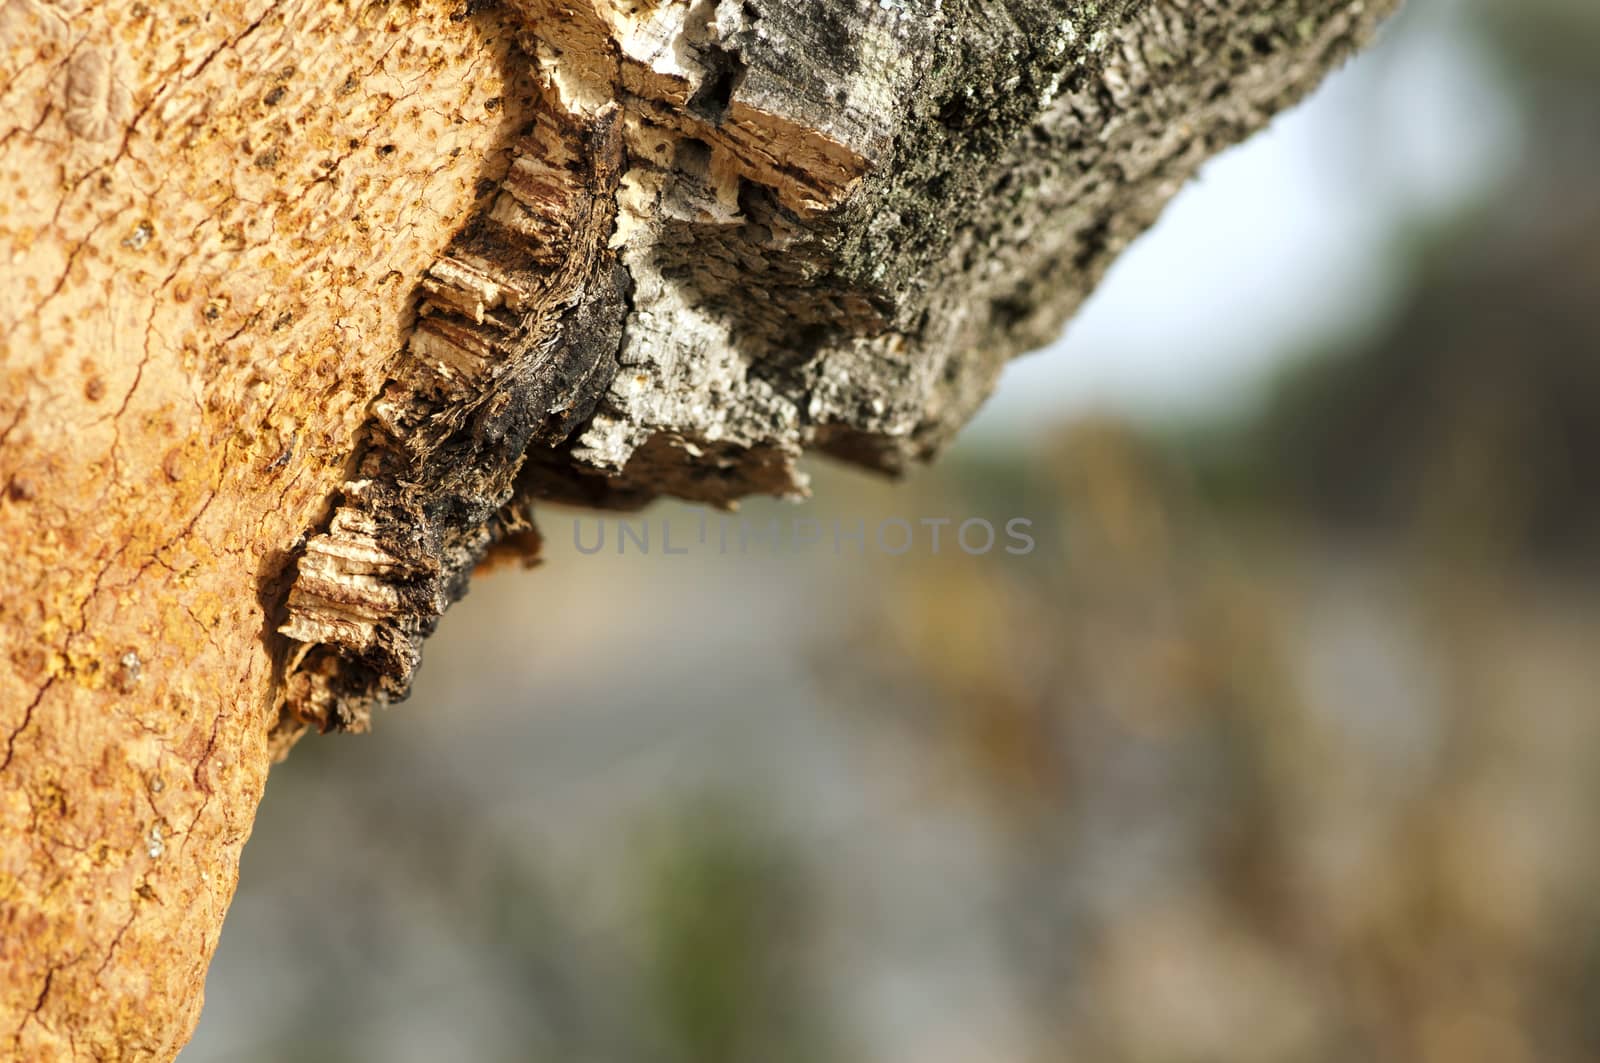 A corkwood tree by deyan_georgiev